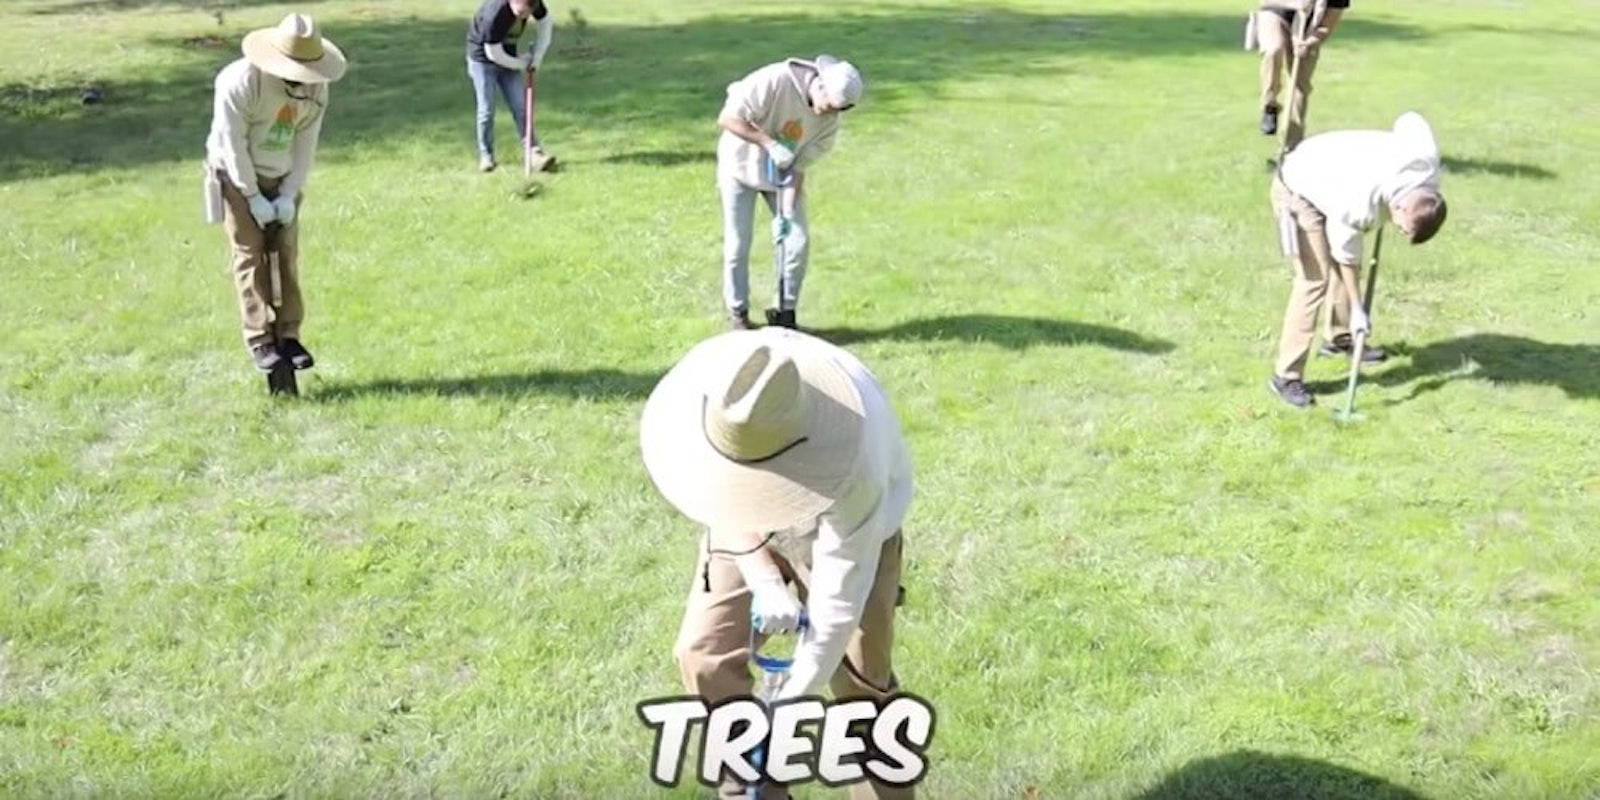 youtubers-20-million-trees